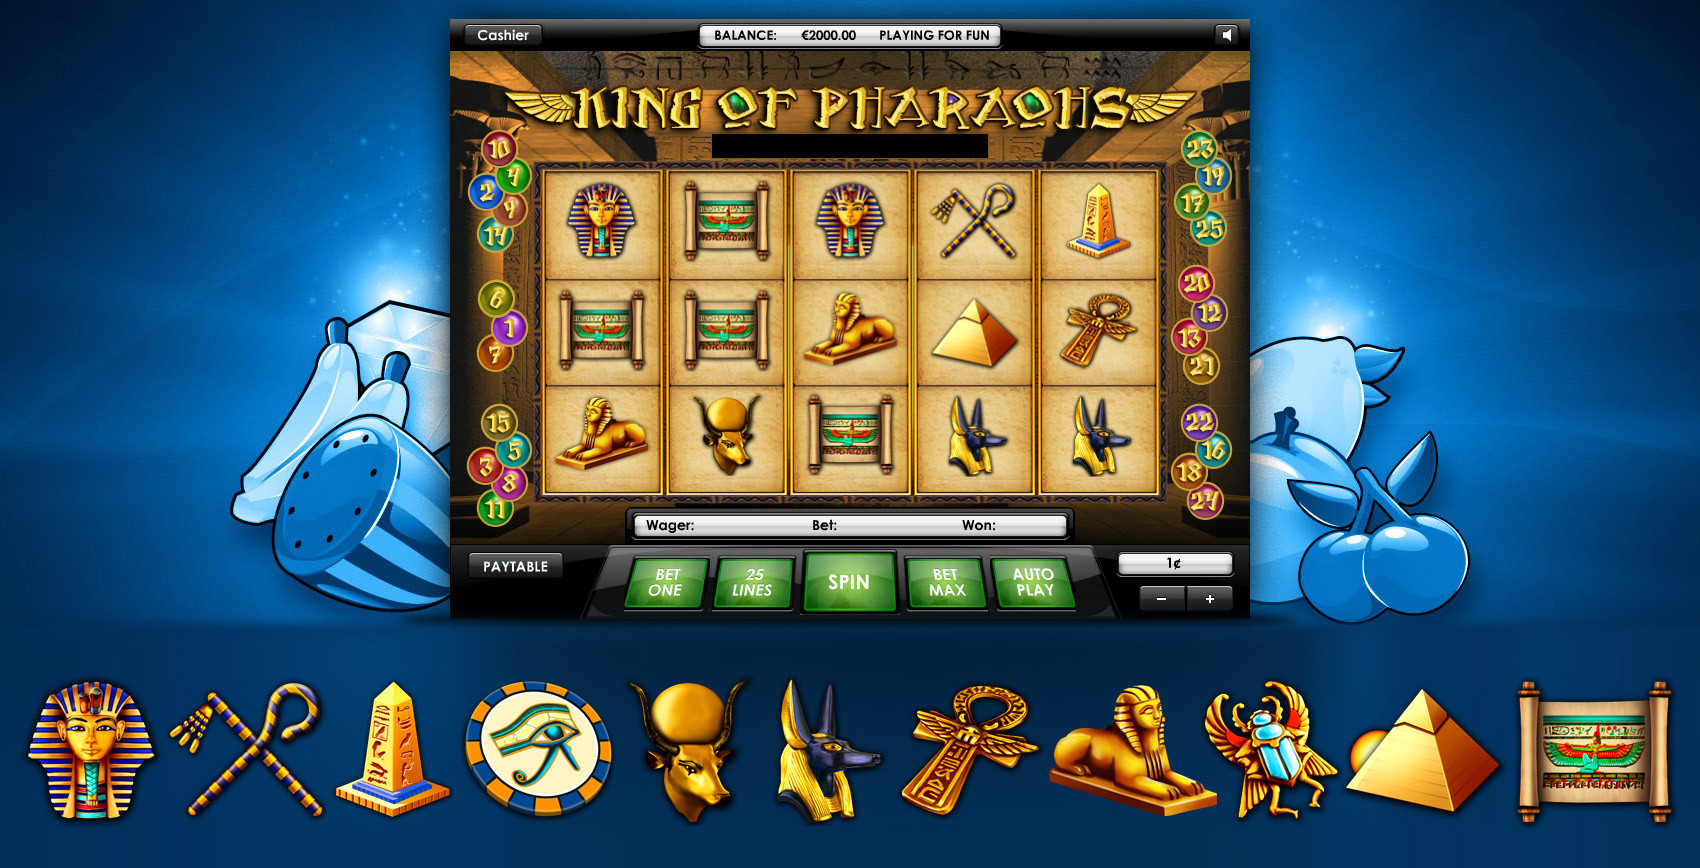 ArtStation - UI Design for Online Casino slot machine game